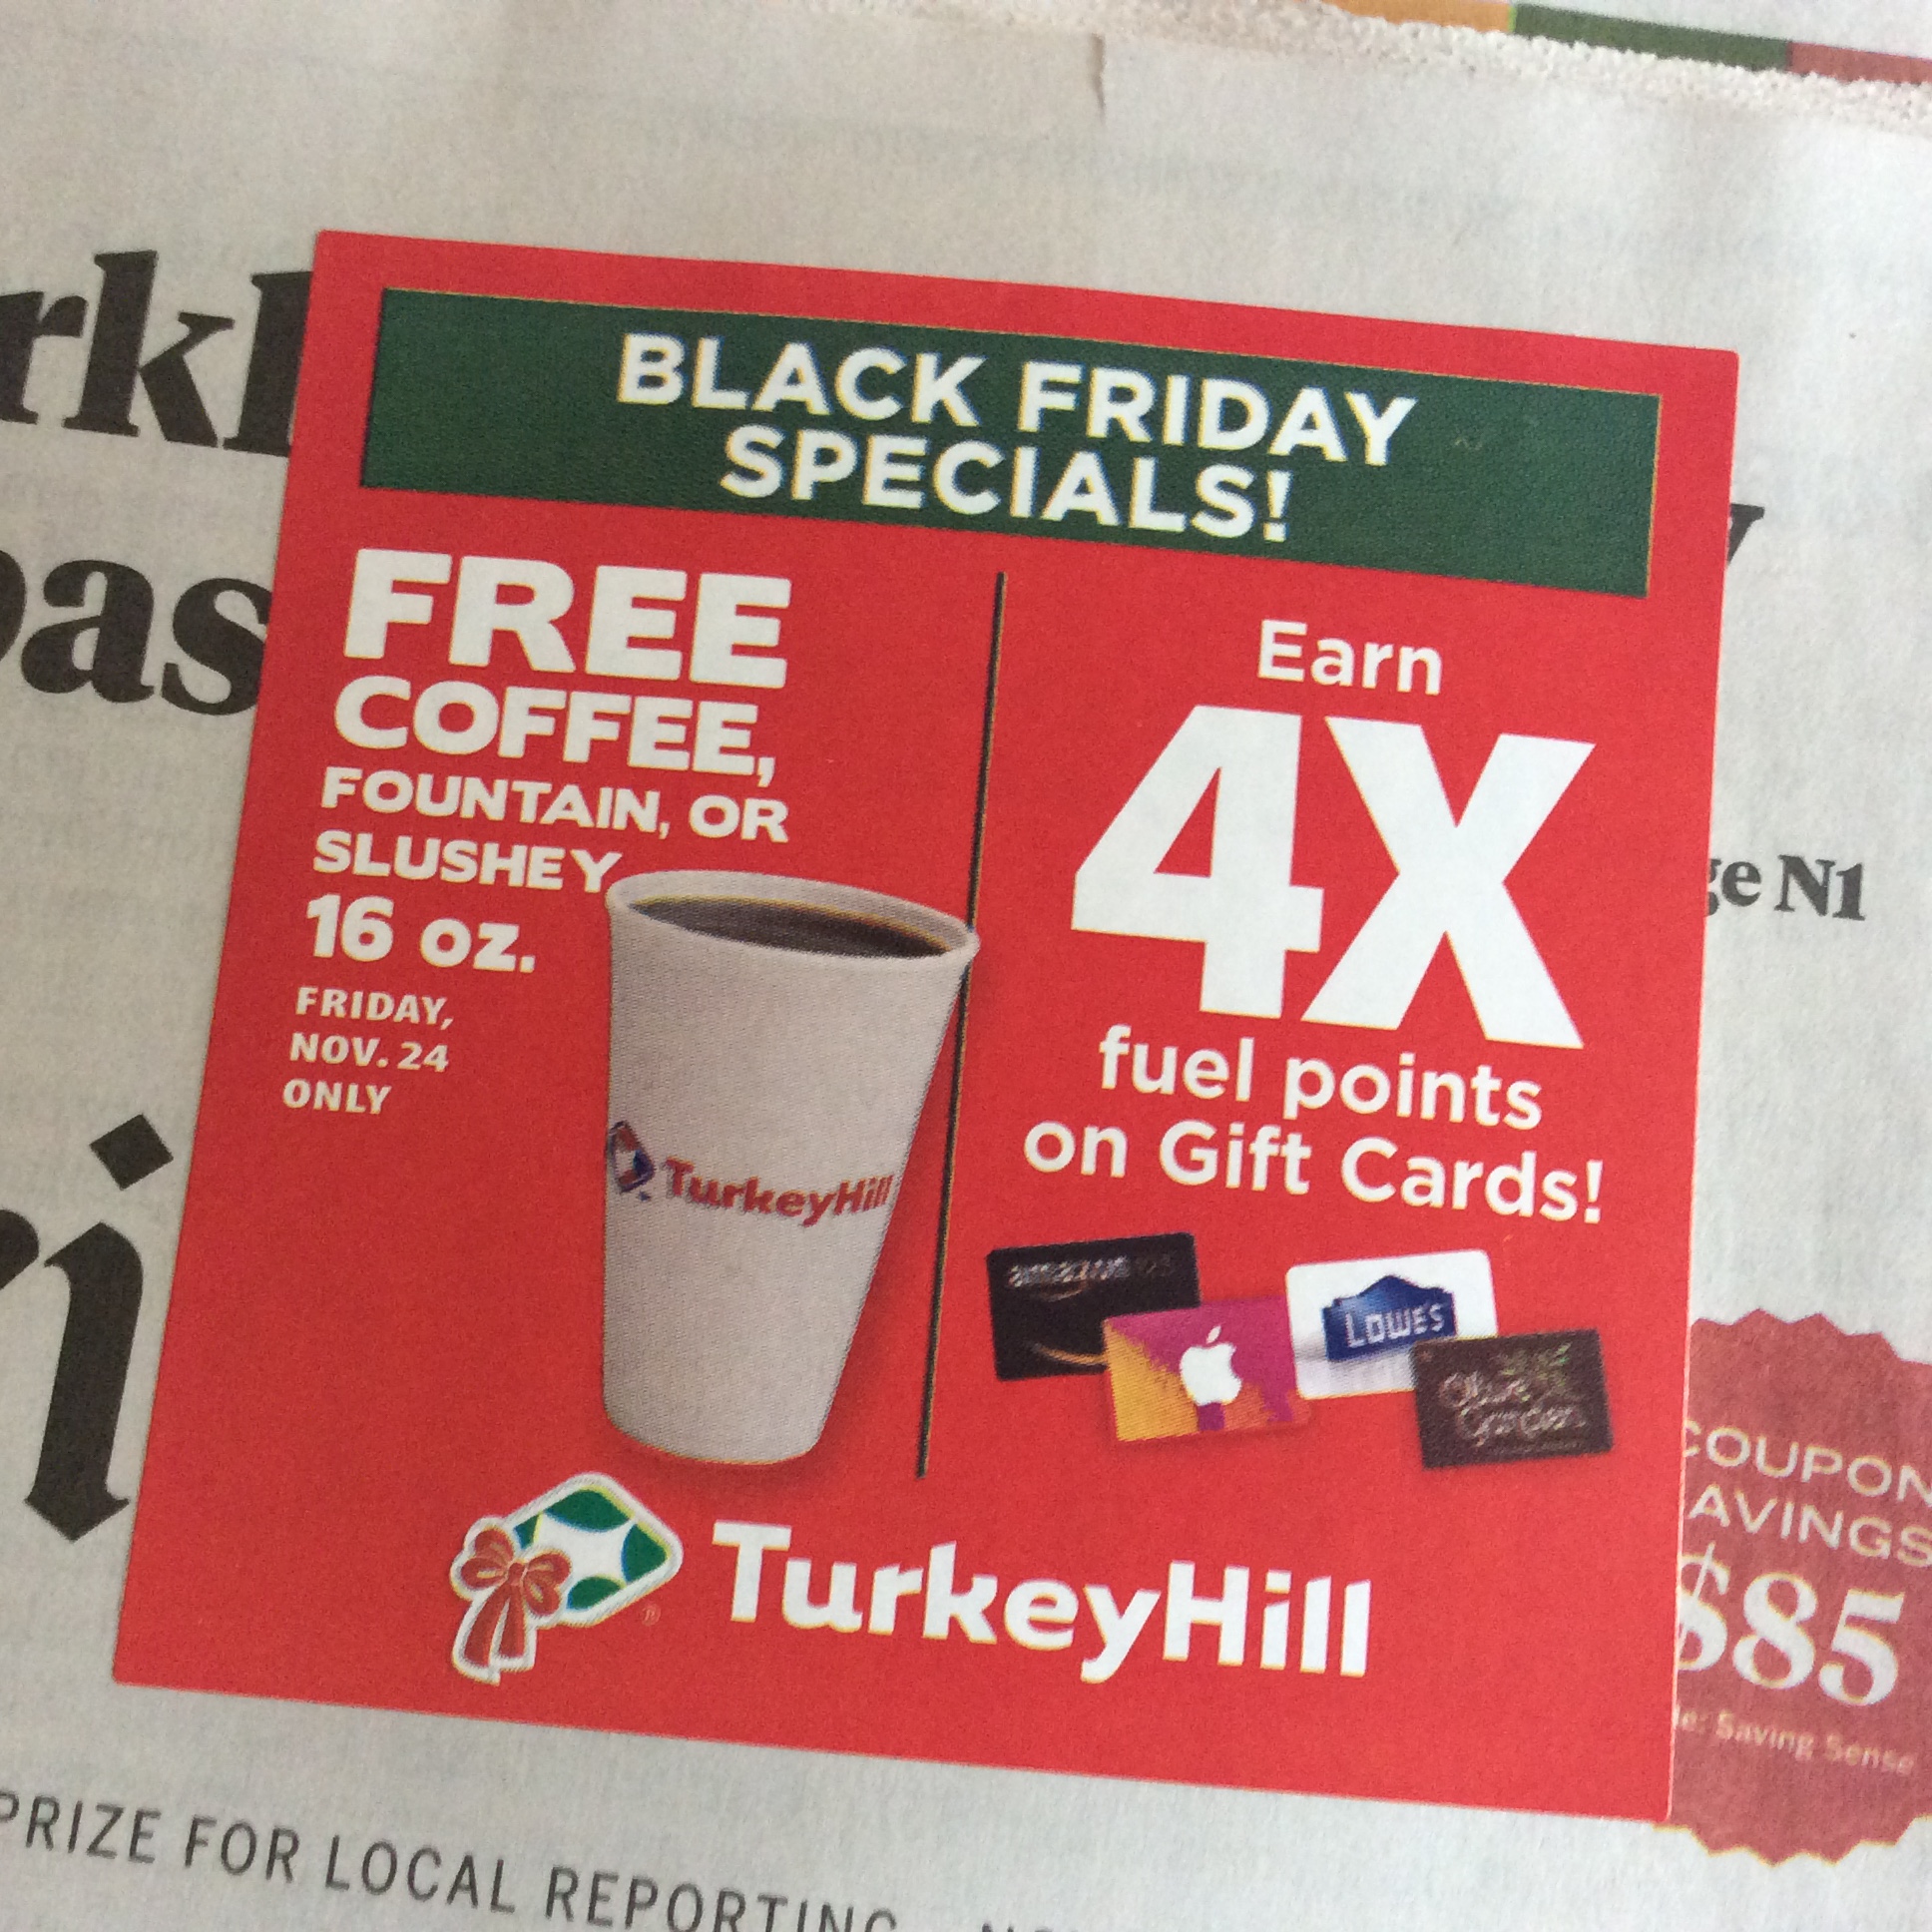 Free Turkey Hill Coffee, Fountain, or Slushey on Black Friday | Ship Saves